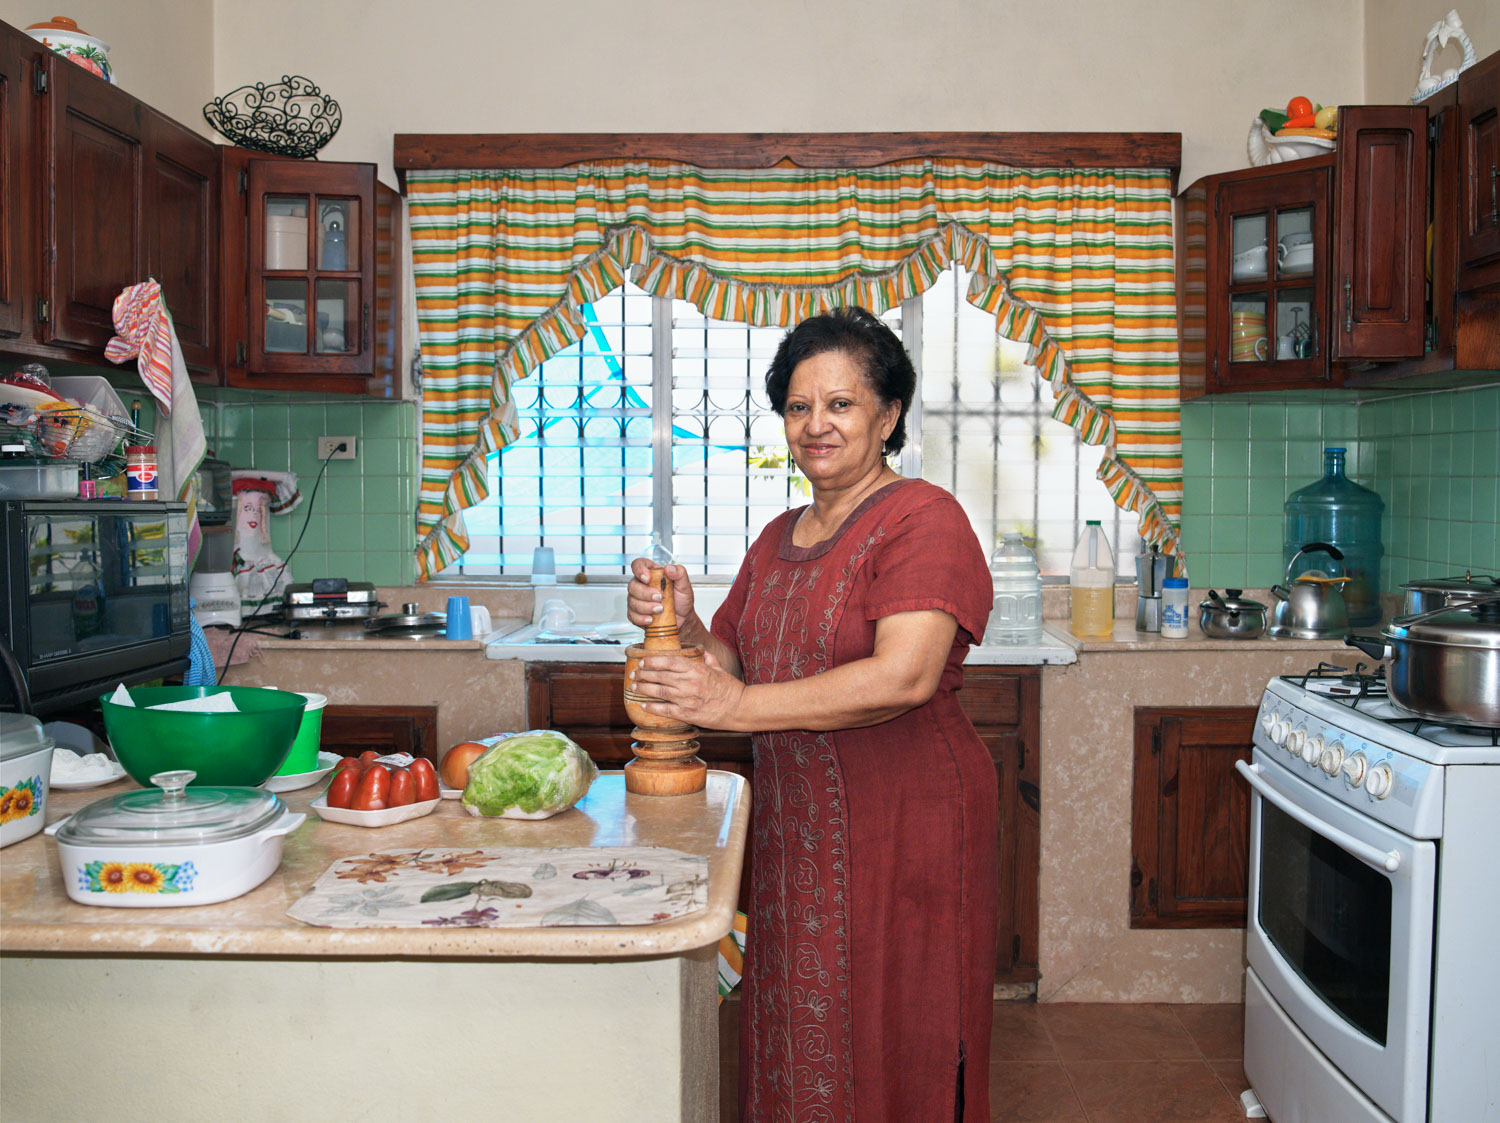 Tía Chea in the Kitchen, 2008. Gazcue, Santo Domingo, R.D.